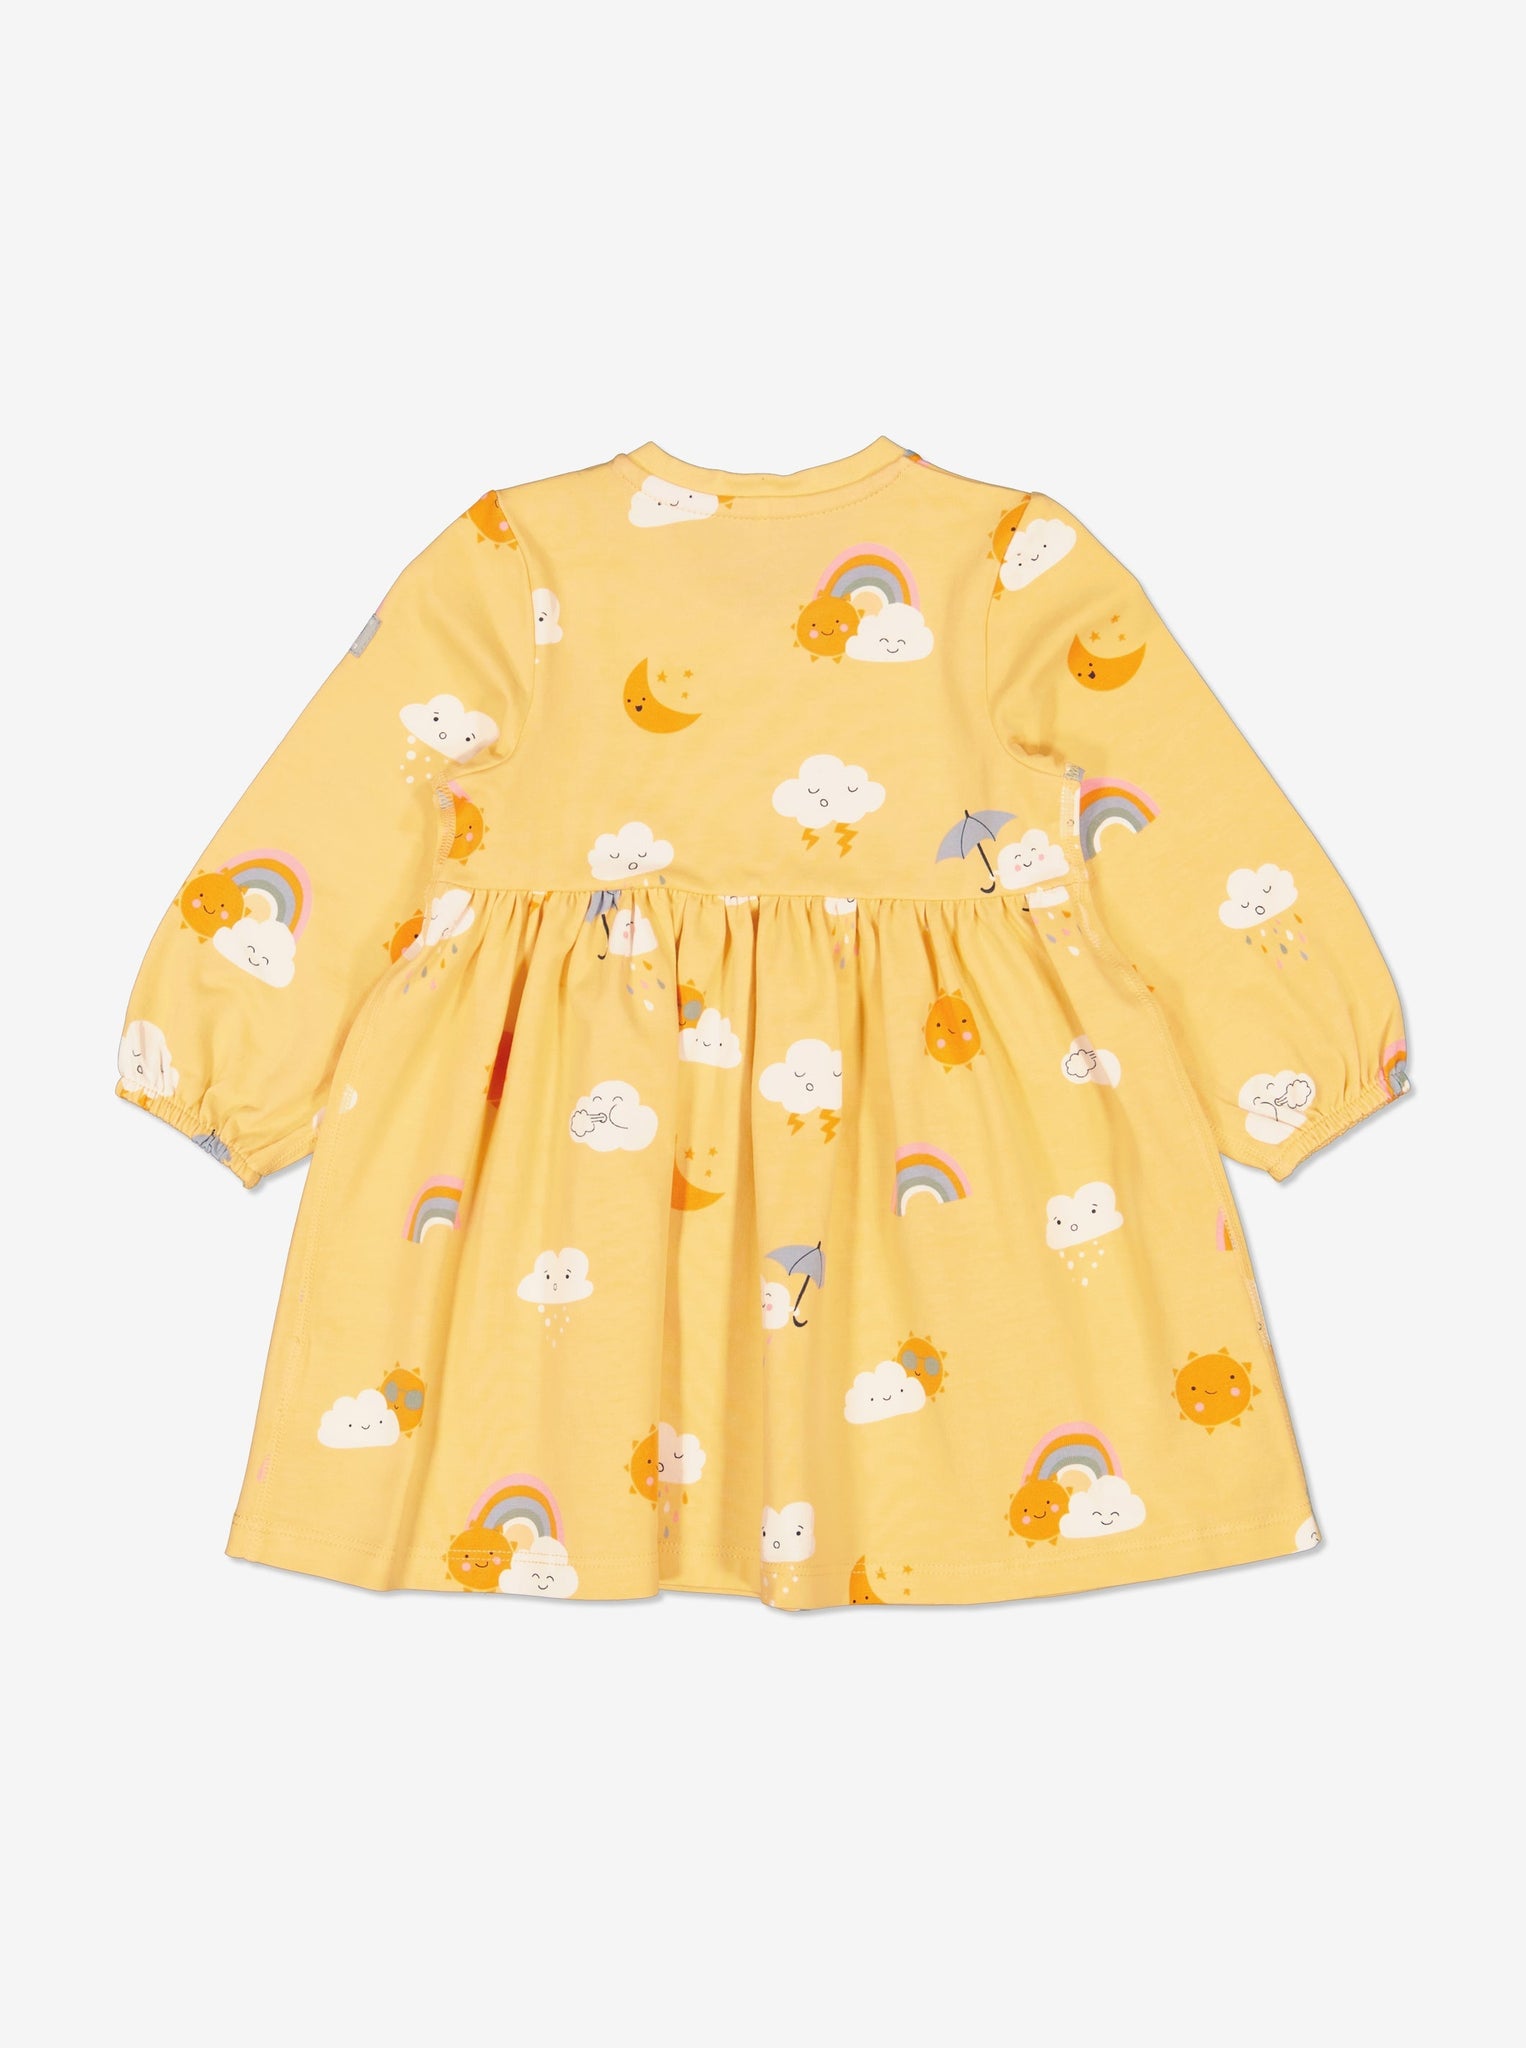  Rainbow Newborn Baby Dress from Polarn O. Pyret Kidswear. Made using environmentally friendly materials.